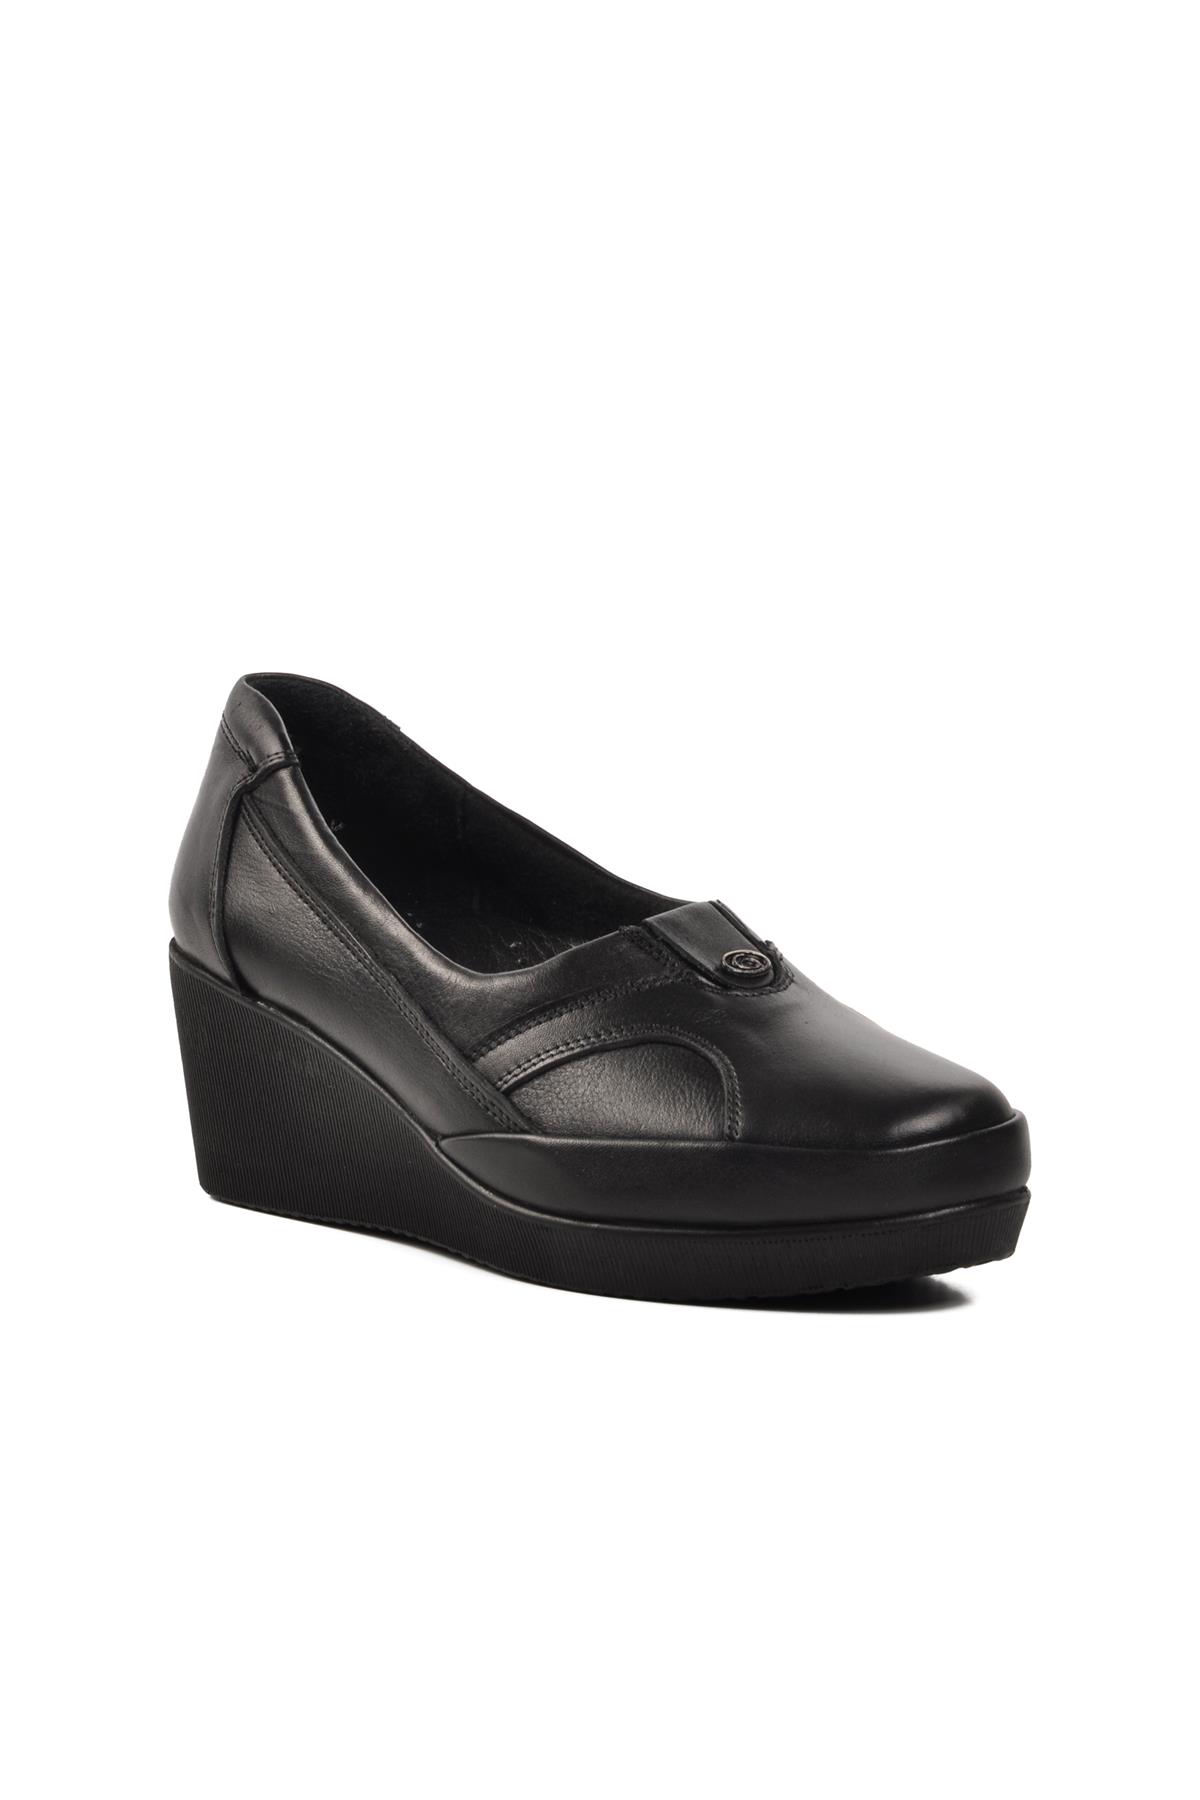 Ayakmod 105-24K Siyah Hakiki Deri Dolgu Topuk Kadın Günlük Ayakkabı Ayakmod Kadın Günlük Ayakkabı